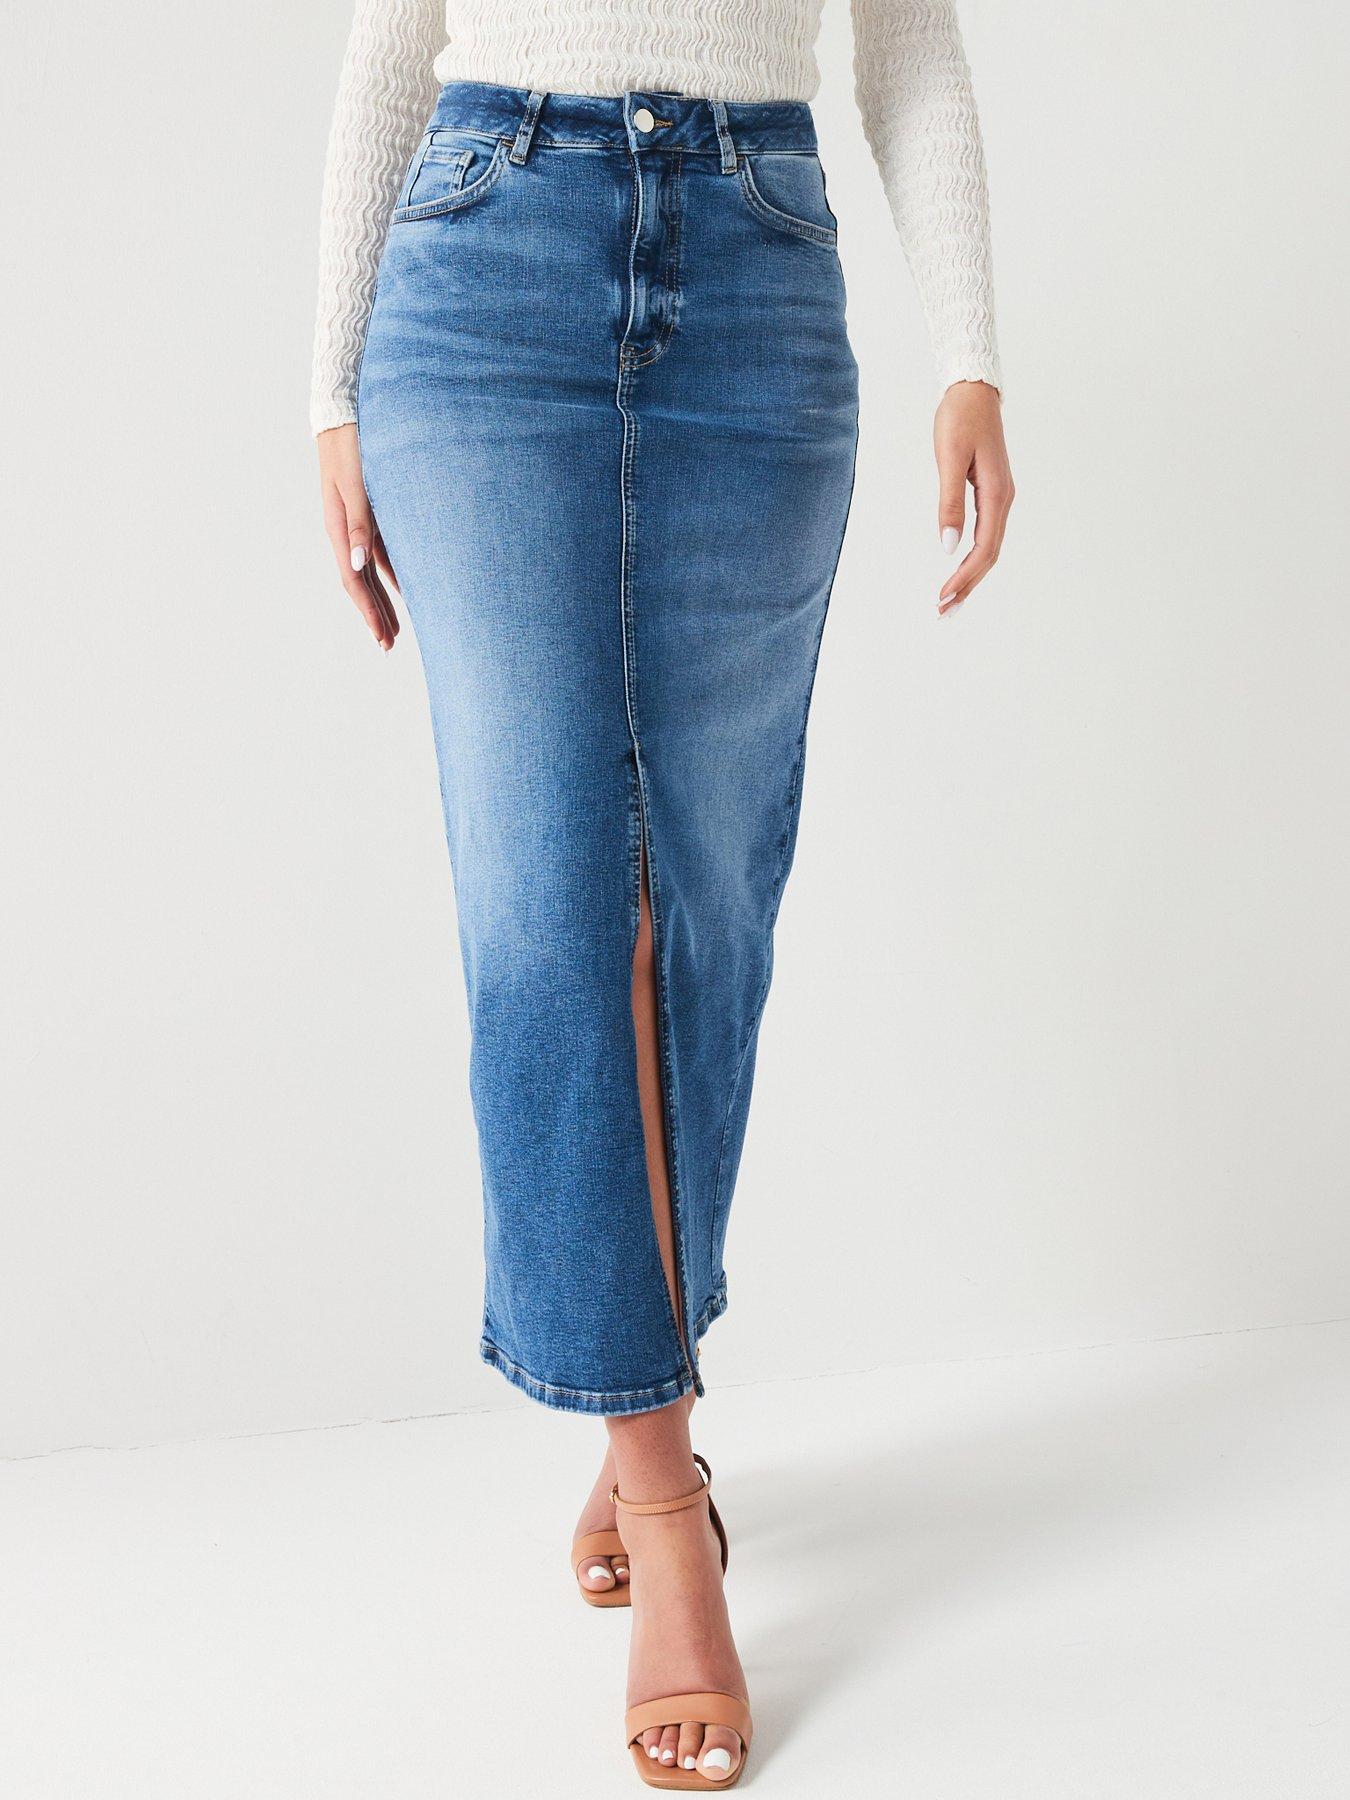 Stella McCartney Denim & Jeans Skirts sale - discounted price | FASHIOLA.in